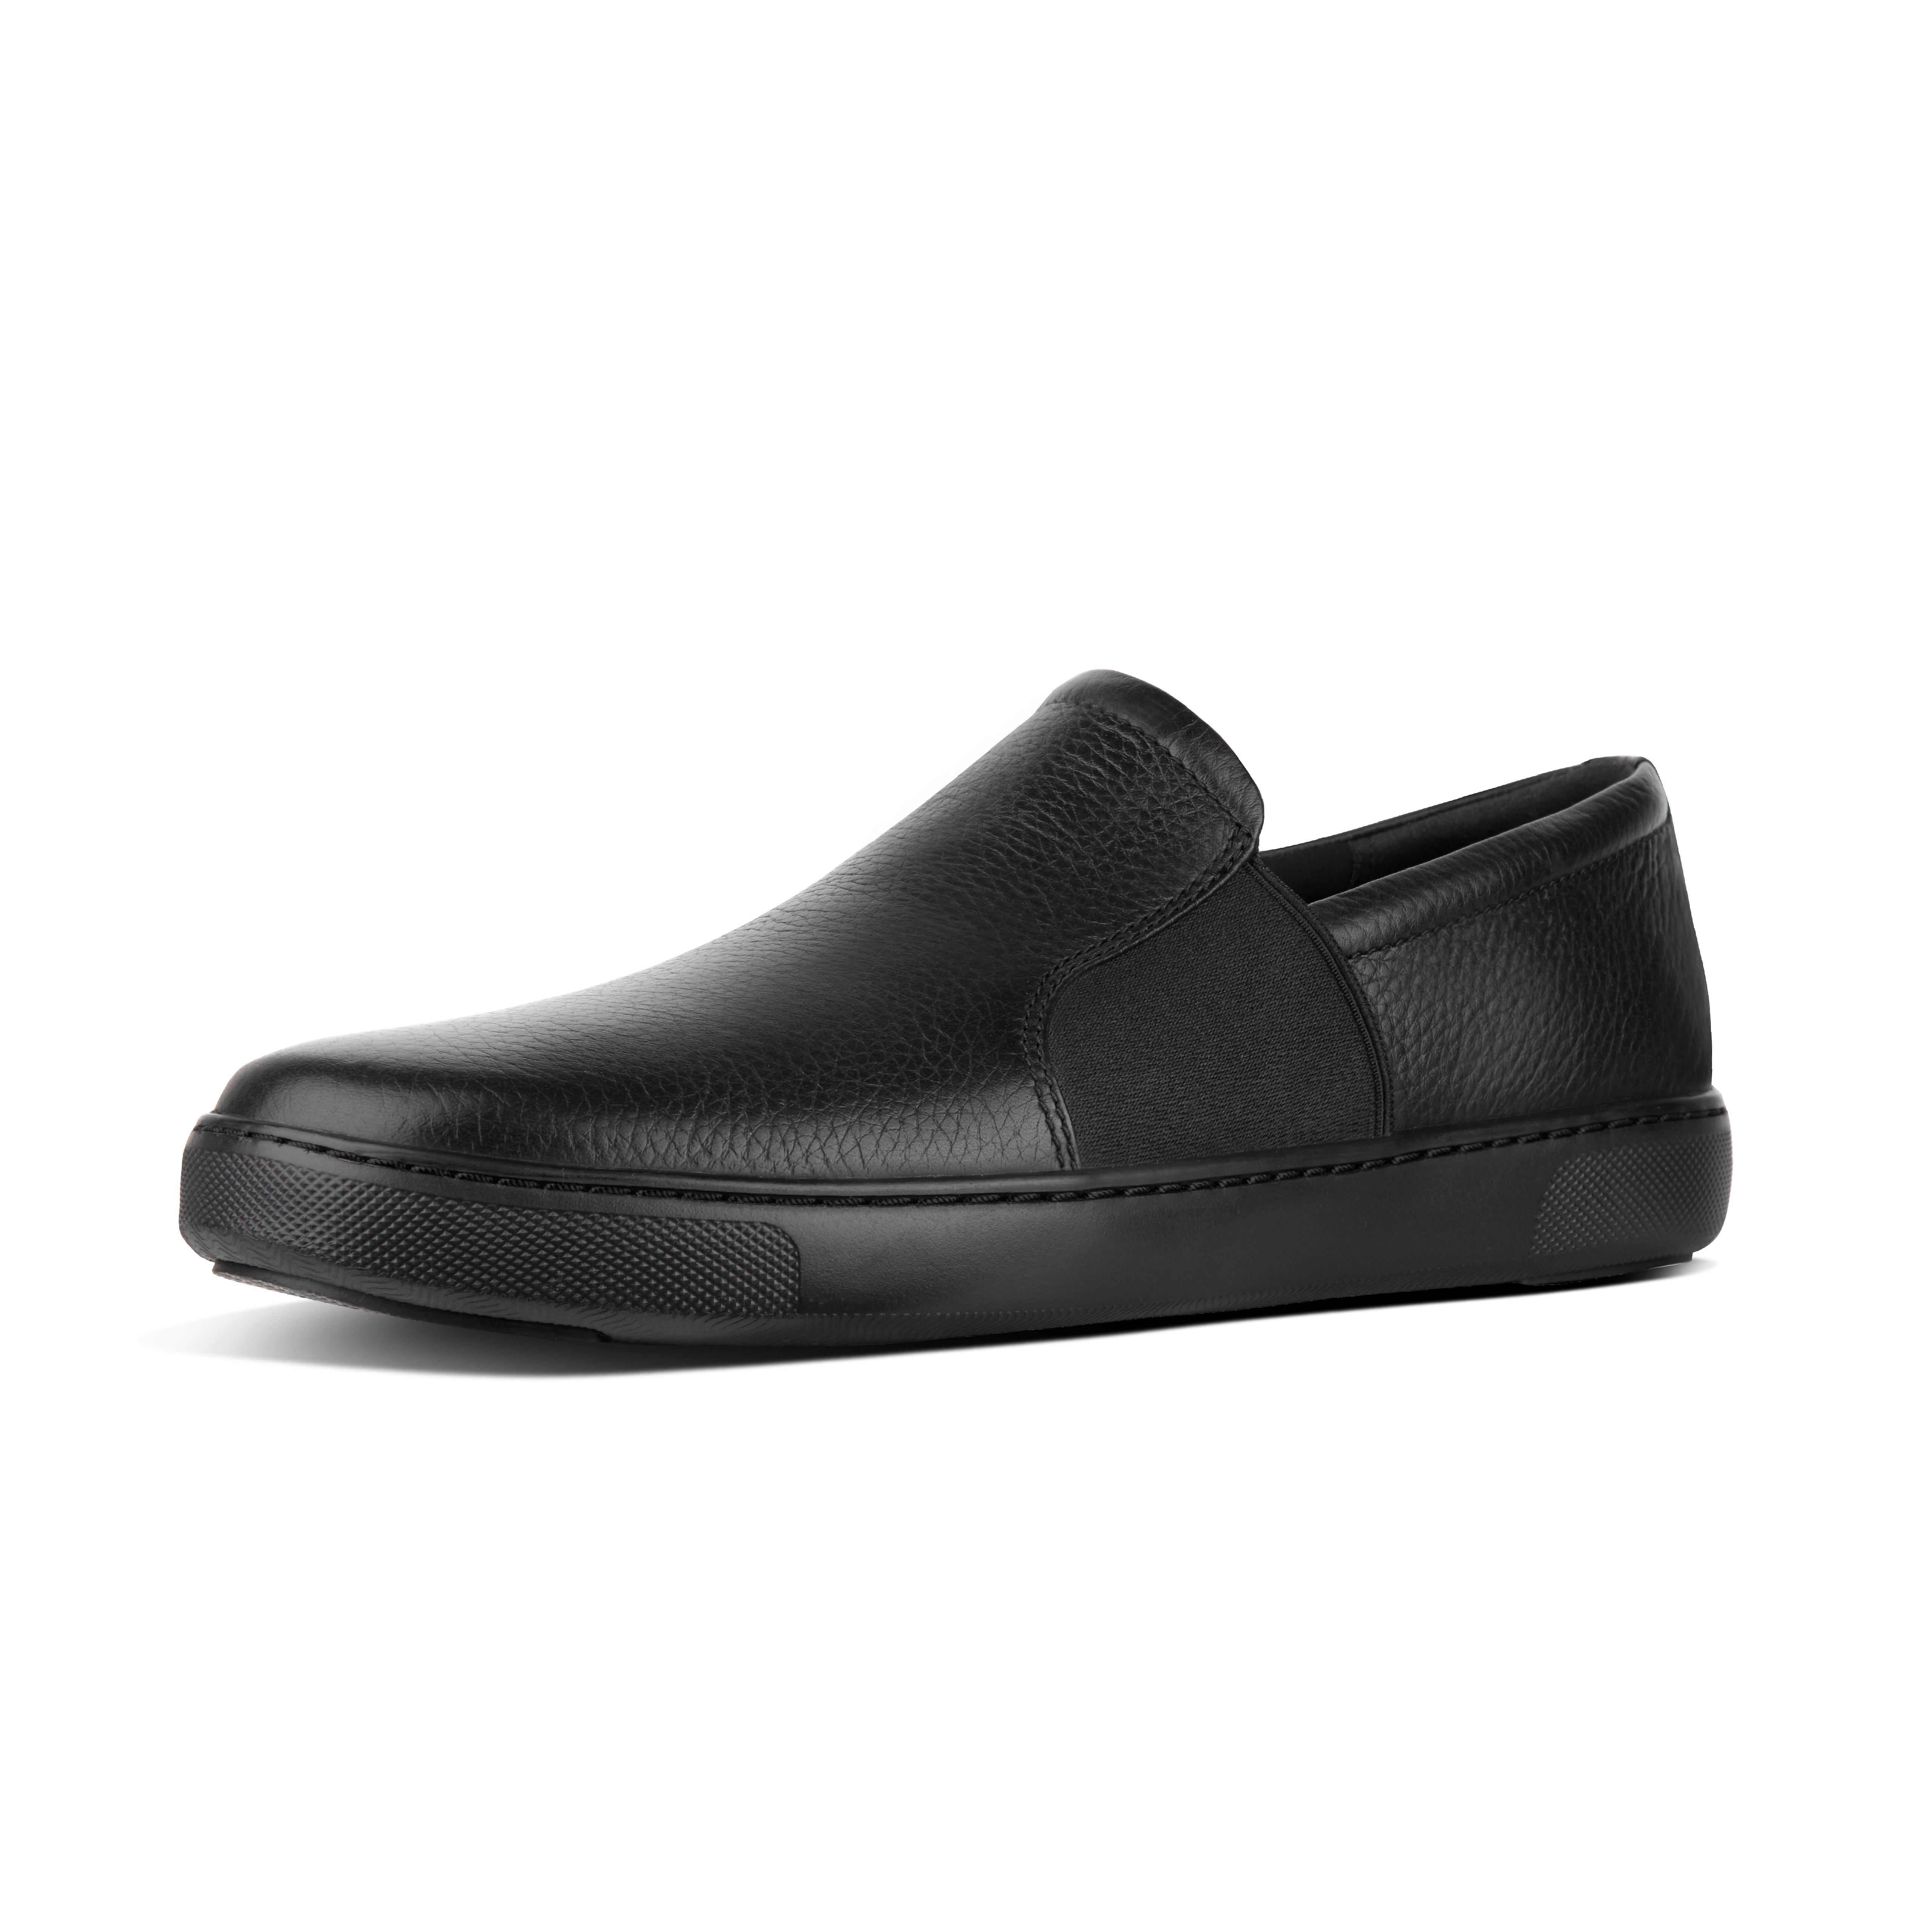 mens black leather slip on shoes